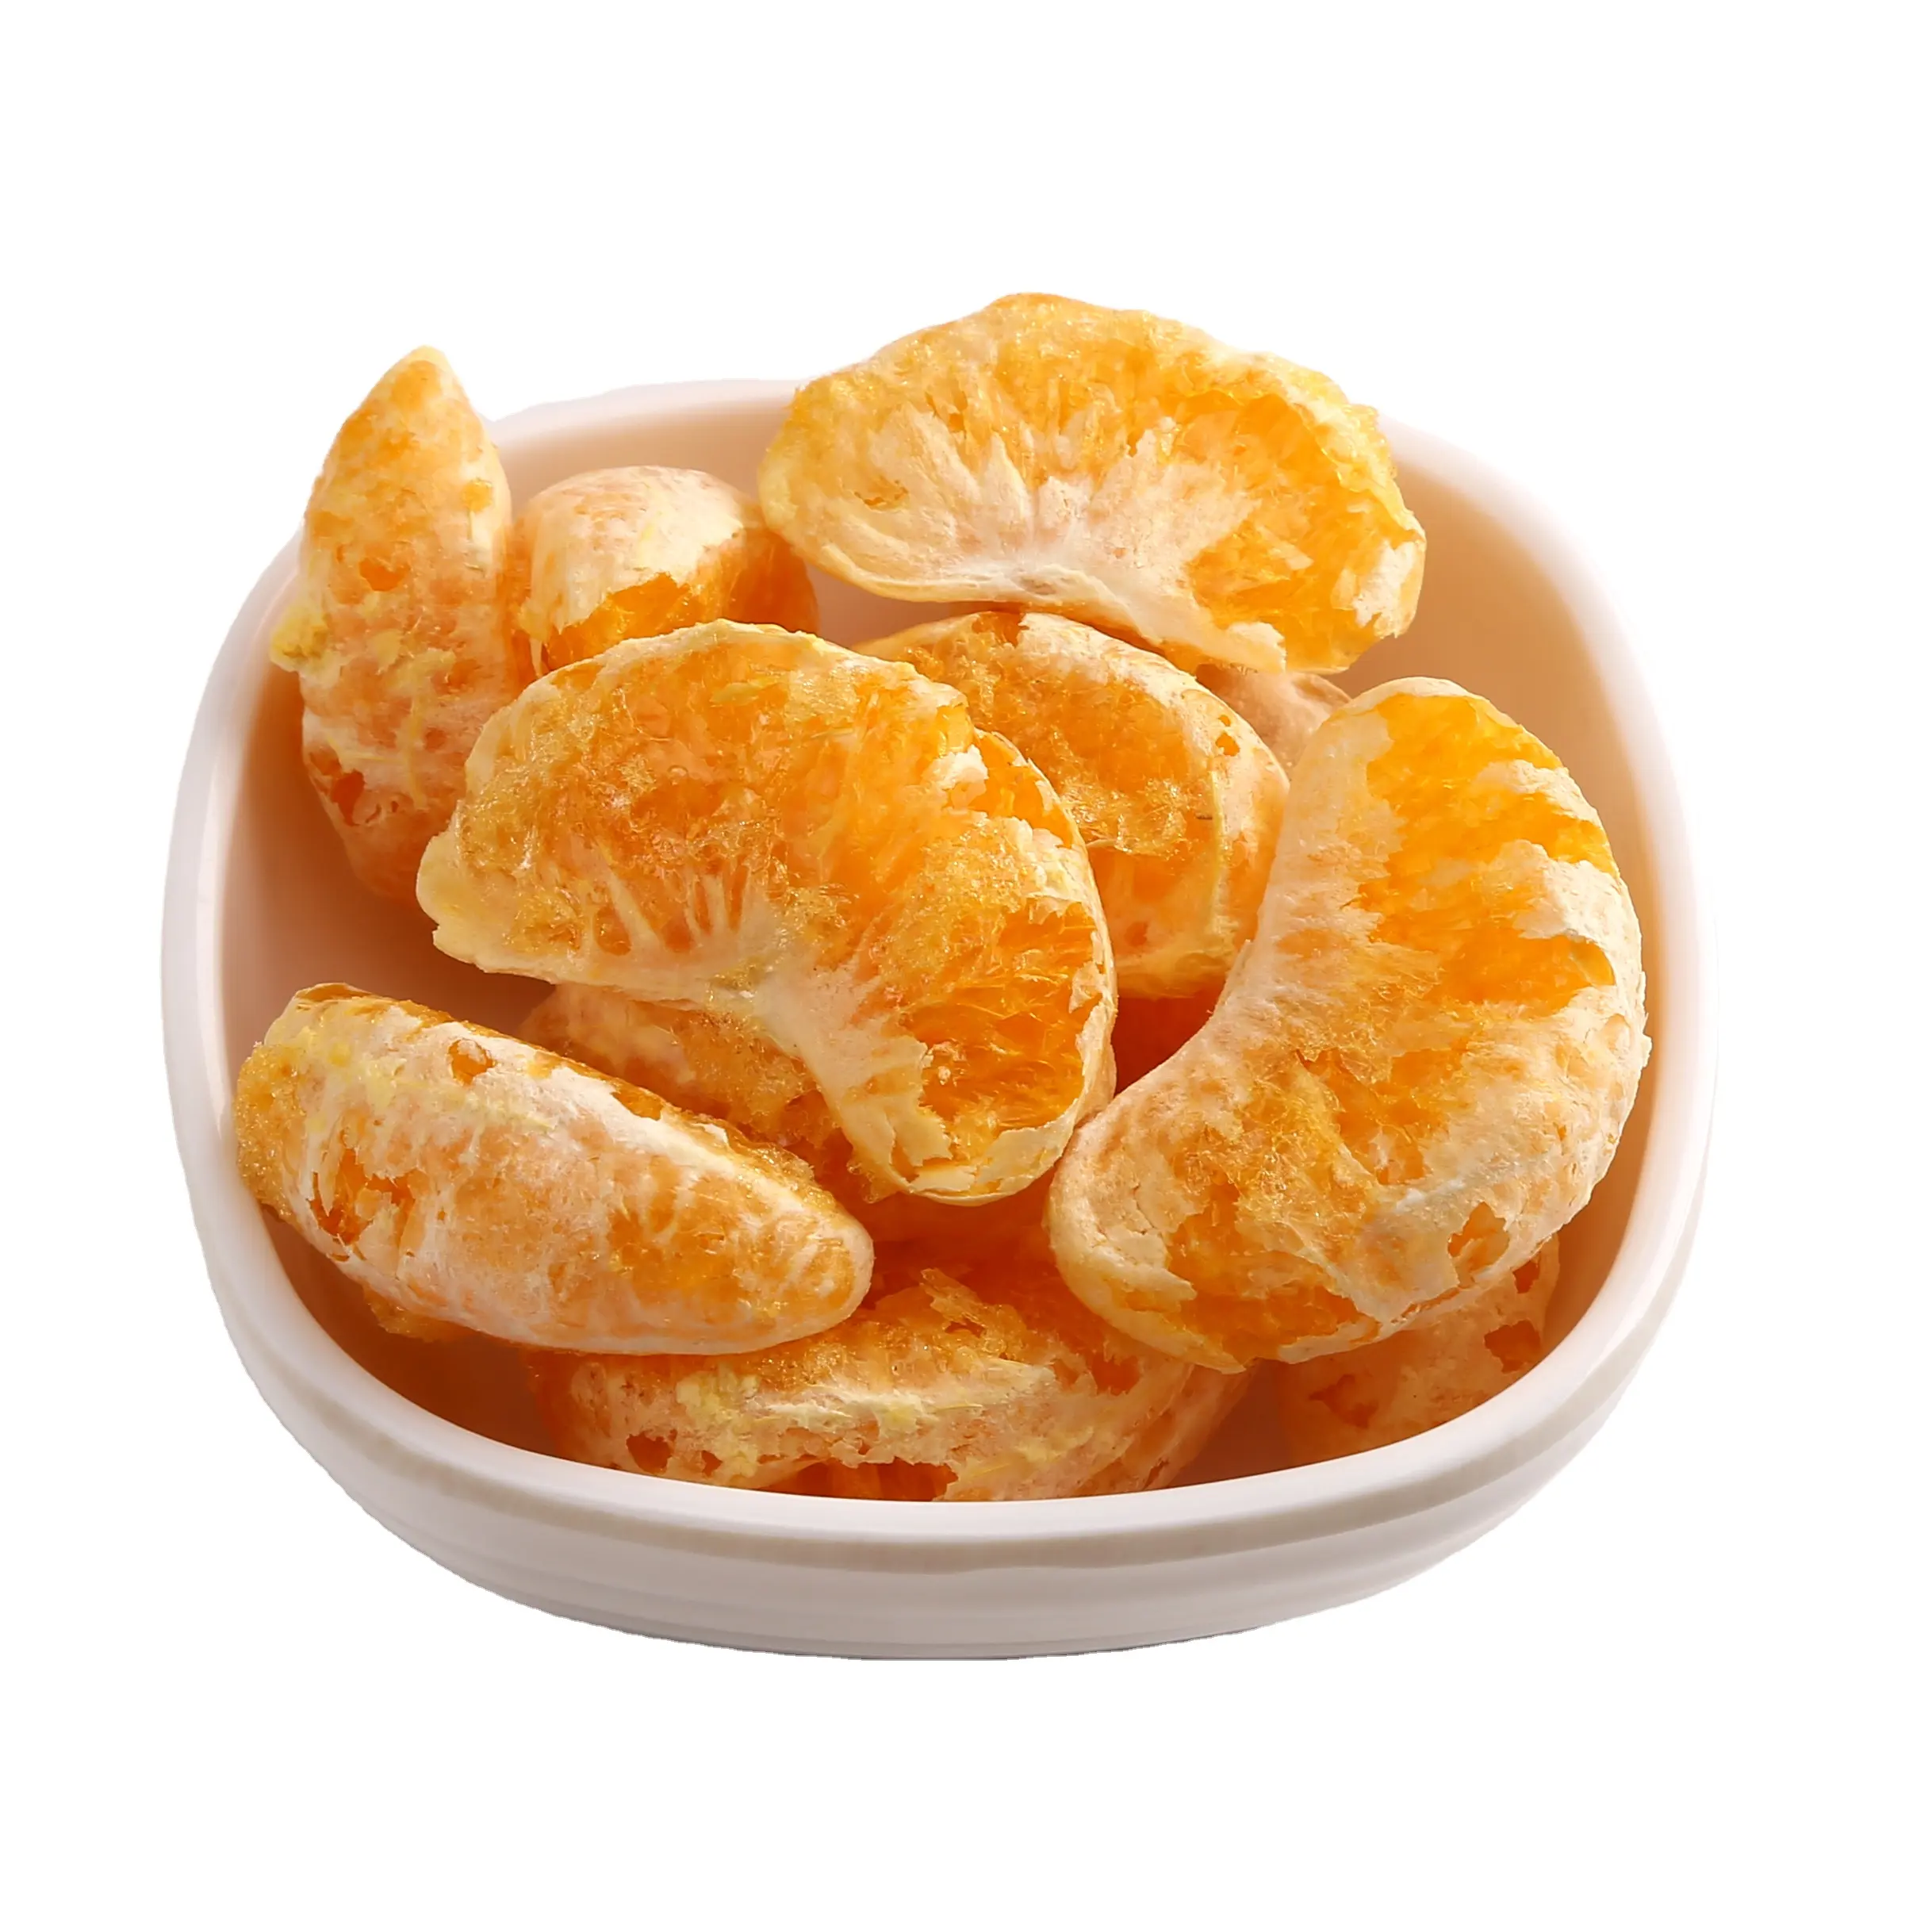 Chá de frutas de tangerina liofilizada por atacado, bom para suplementos vitamínicos, tangerina liofilizada a granel, alimentos FD